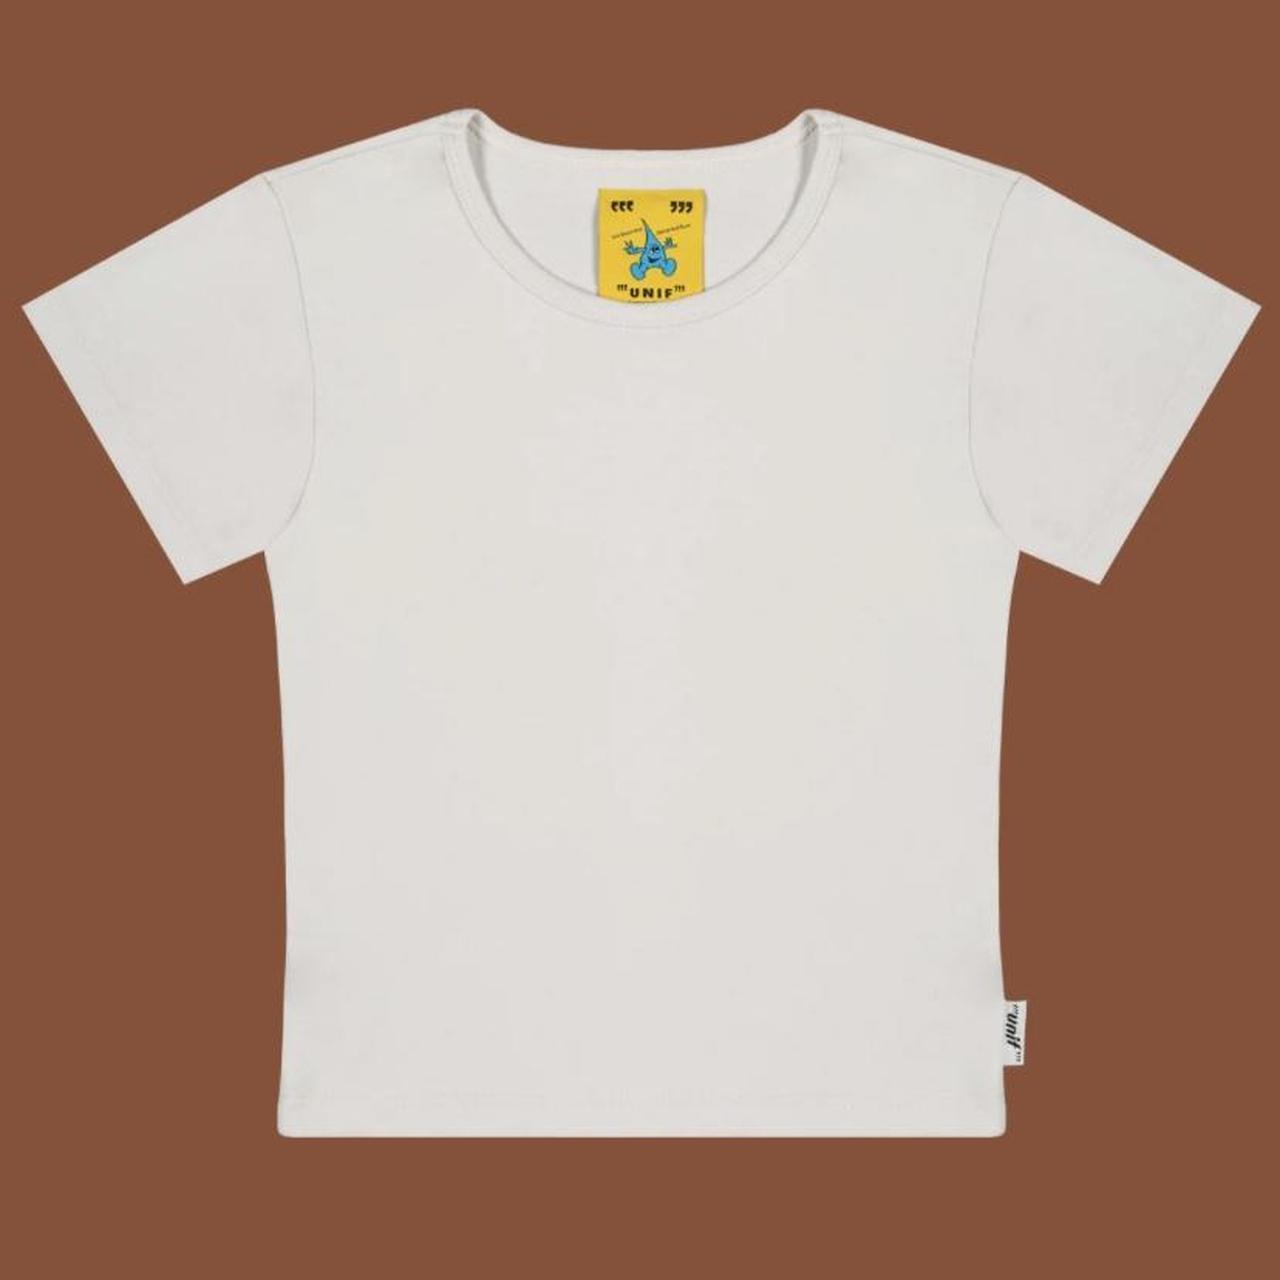 UNIF Women's White and Black T-shirt (4)